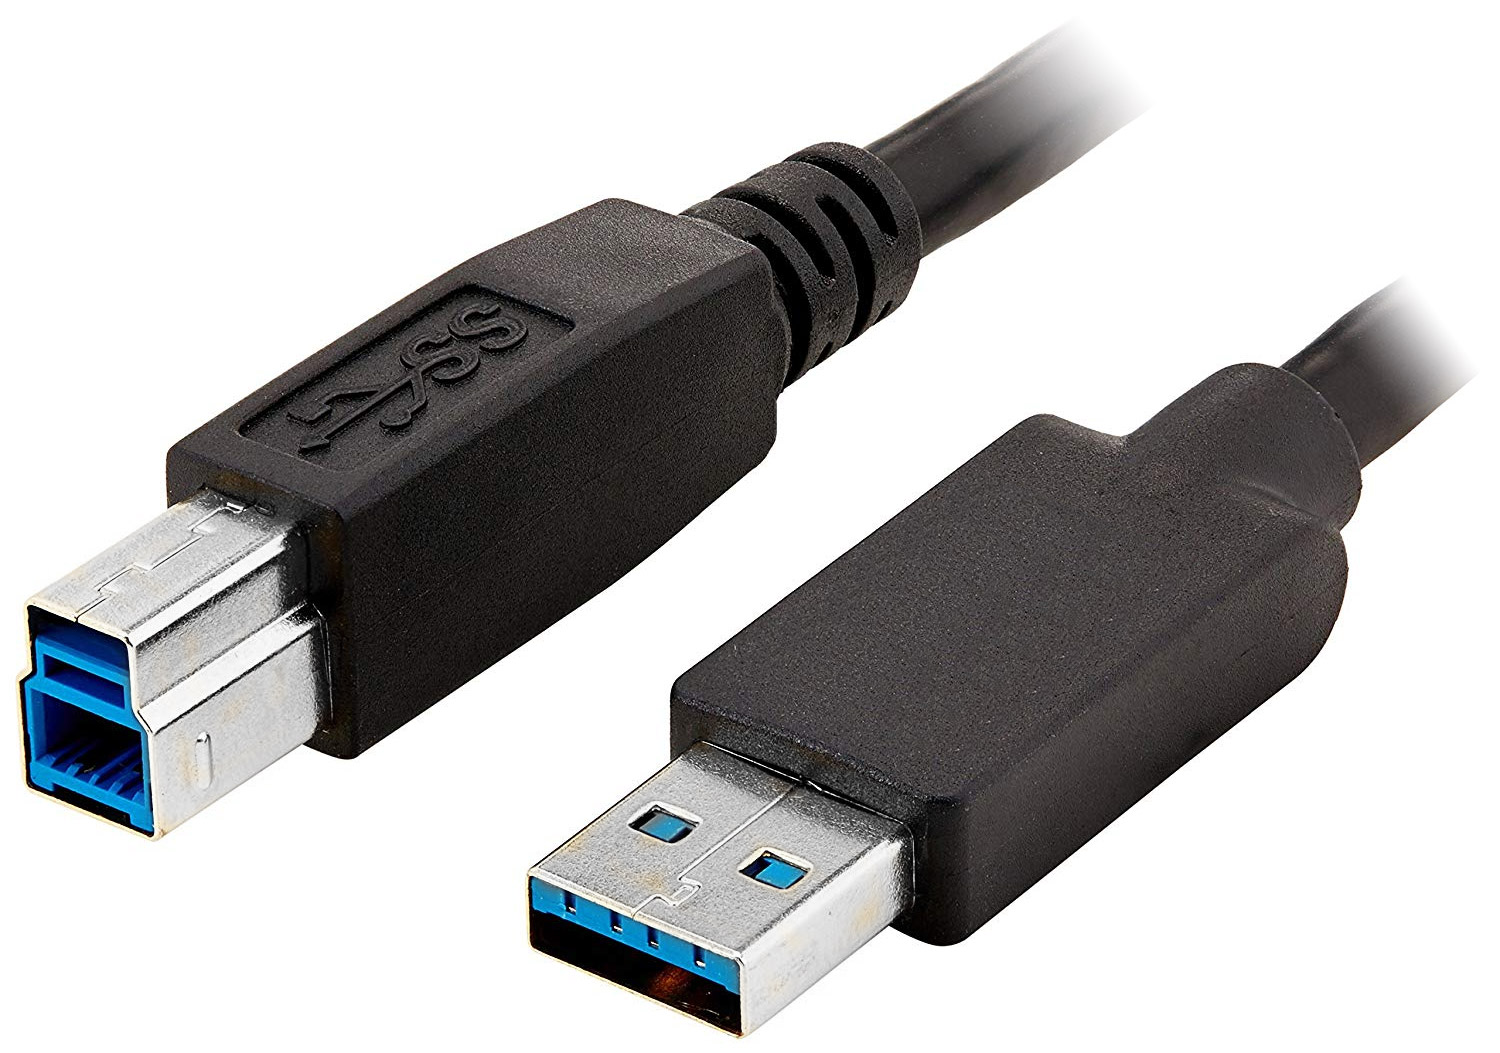  USB 3.0  